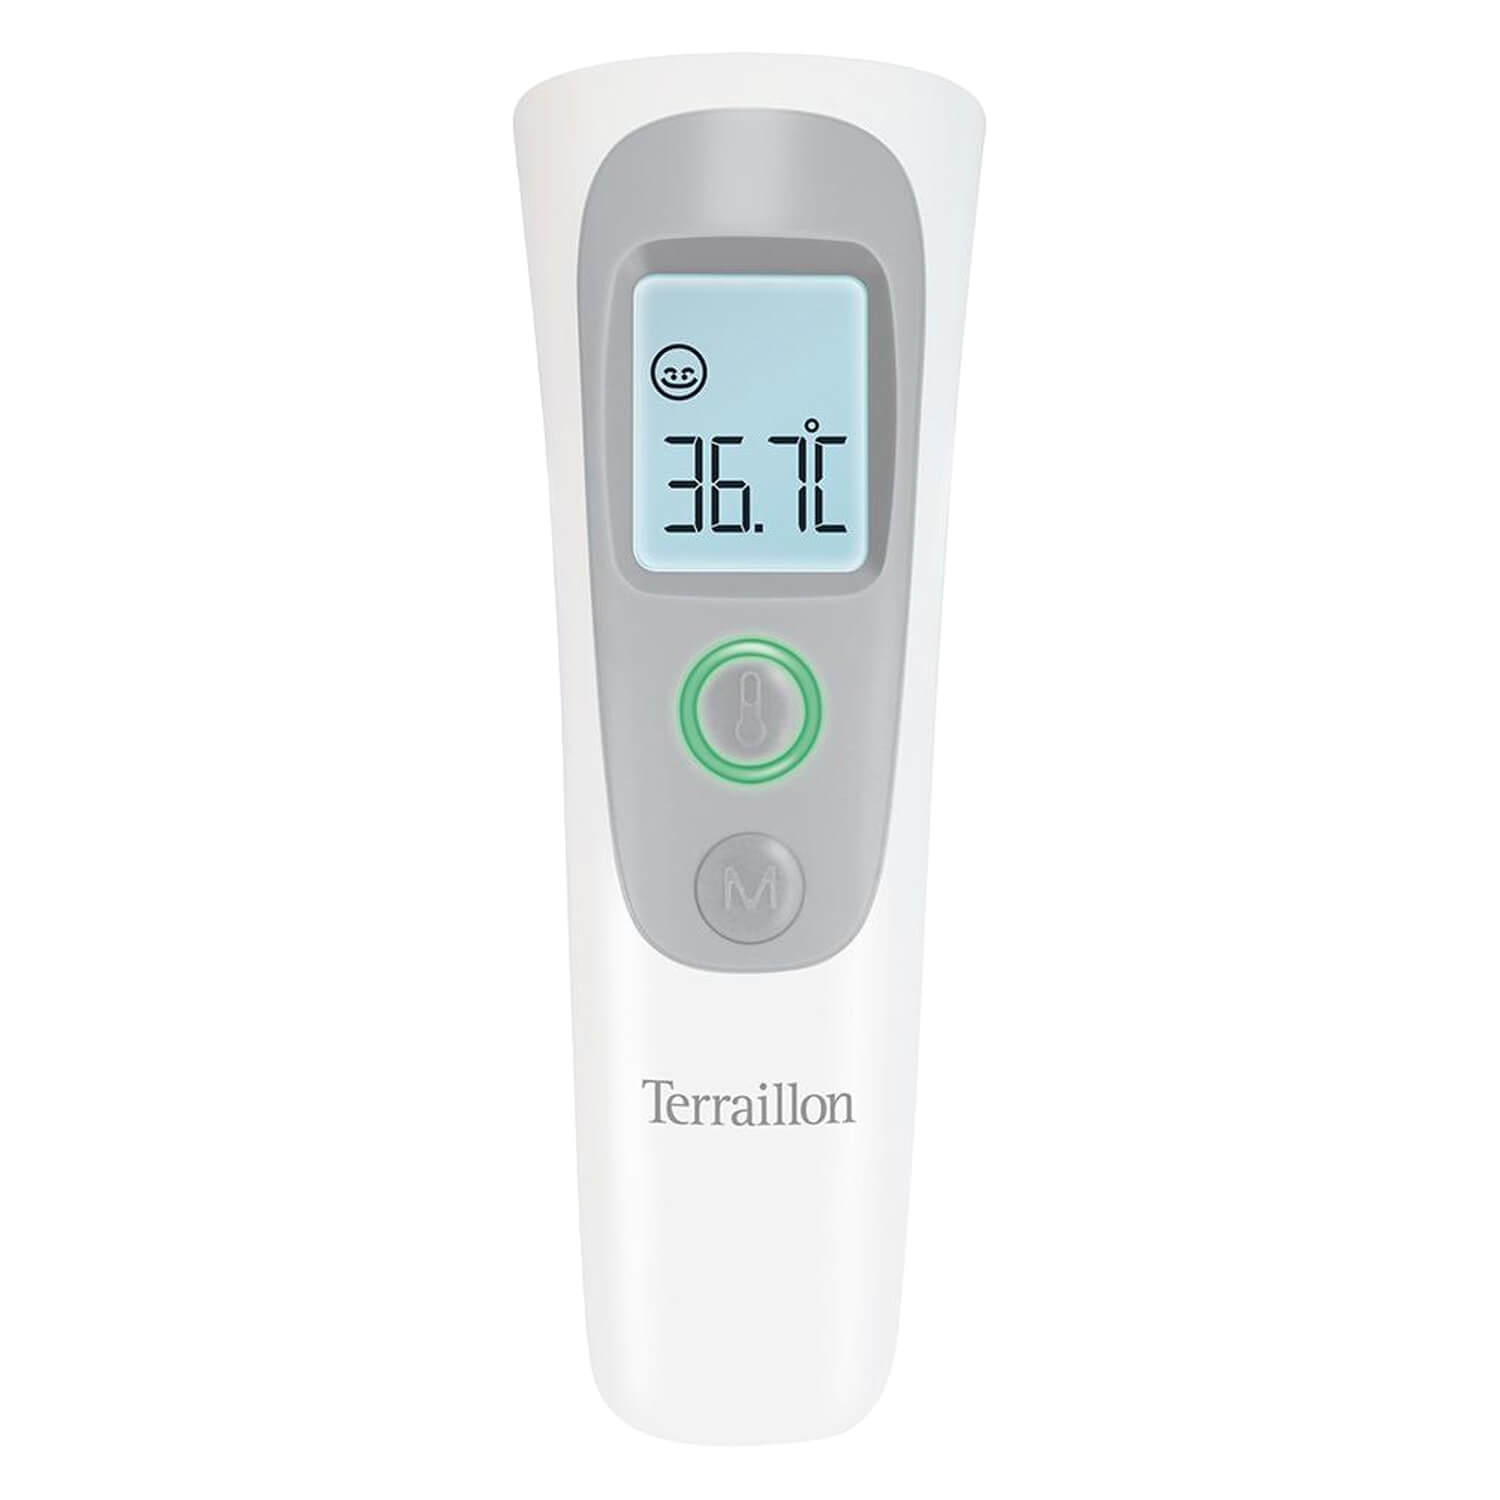 Produktbild von Terraillon - Kontaktloses Infrarot Thermometer